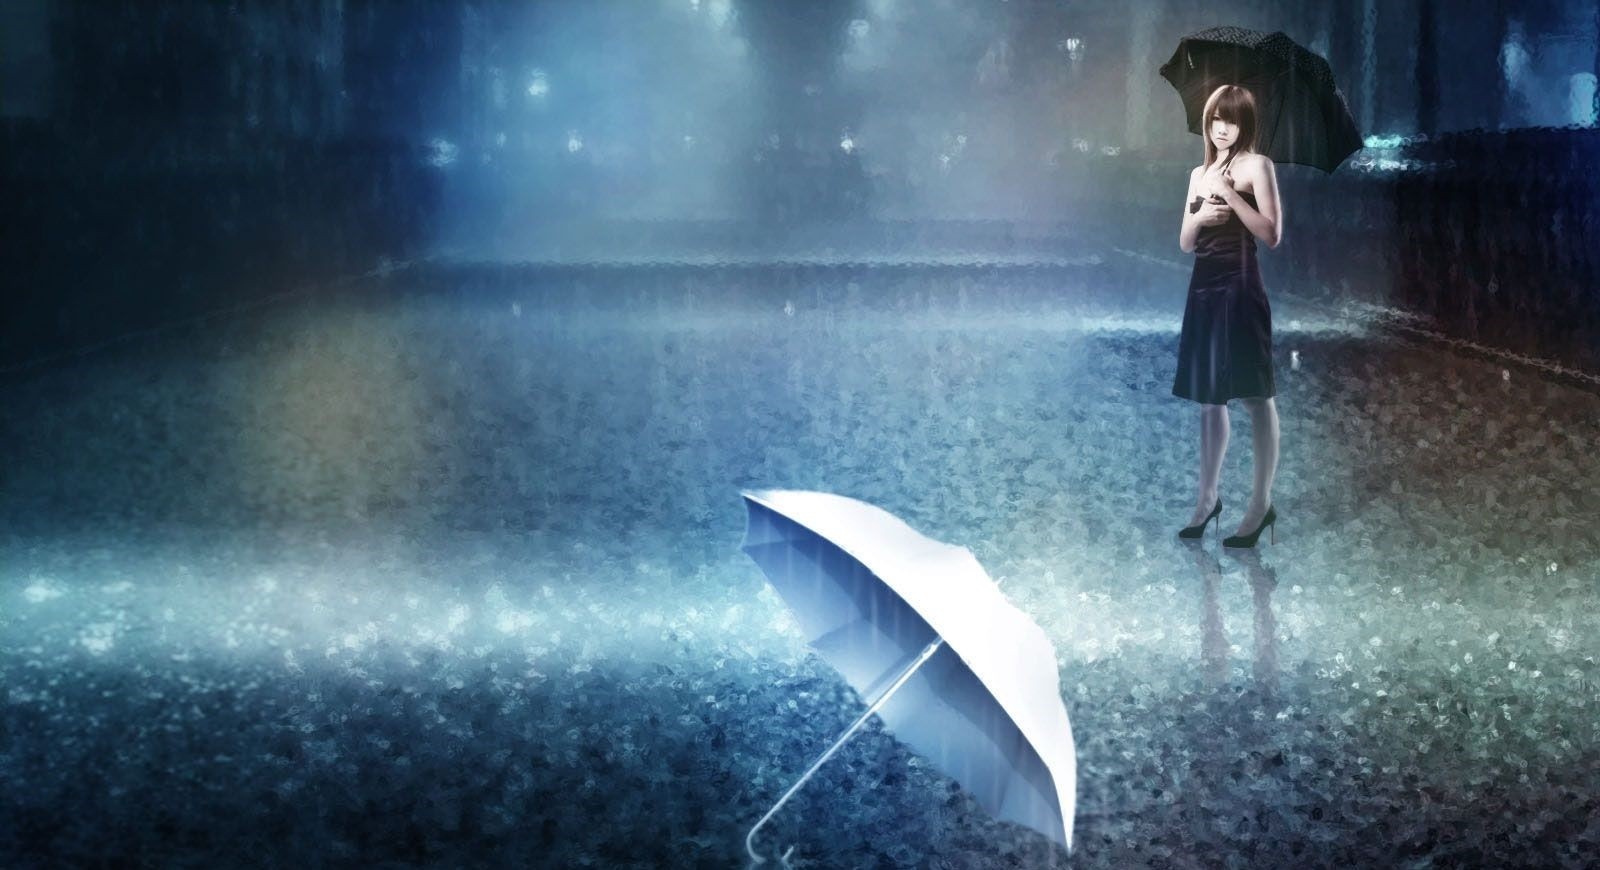 General 1600x870 umbrella outdoors rain women outdoors women with umbrella heels dress street